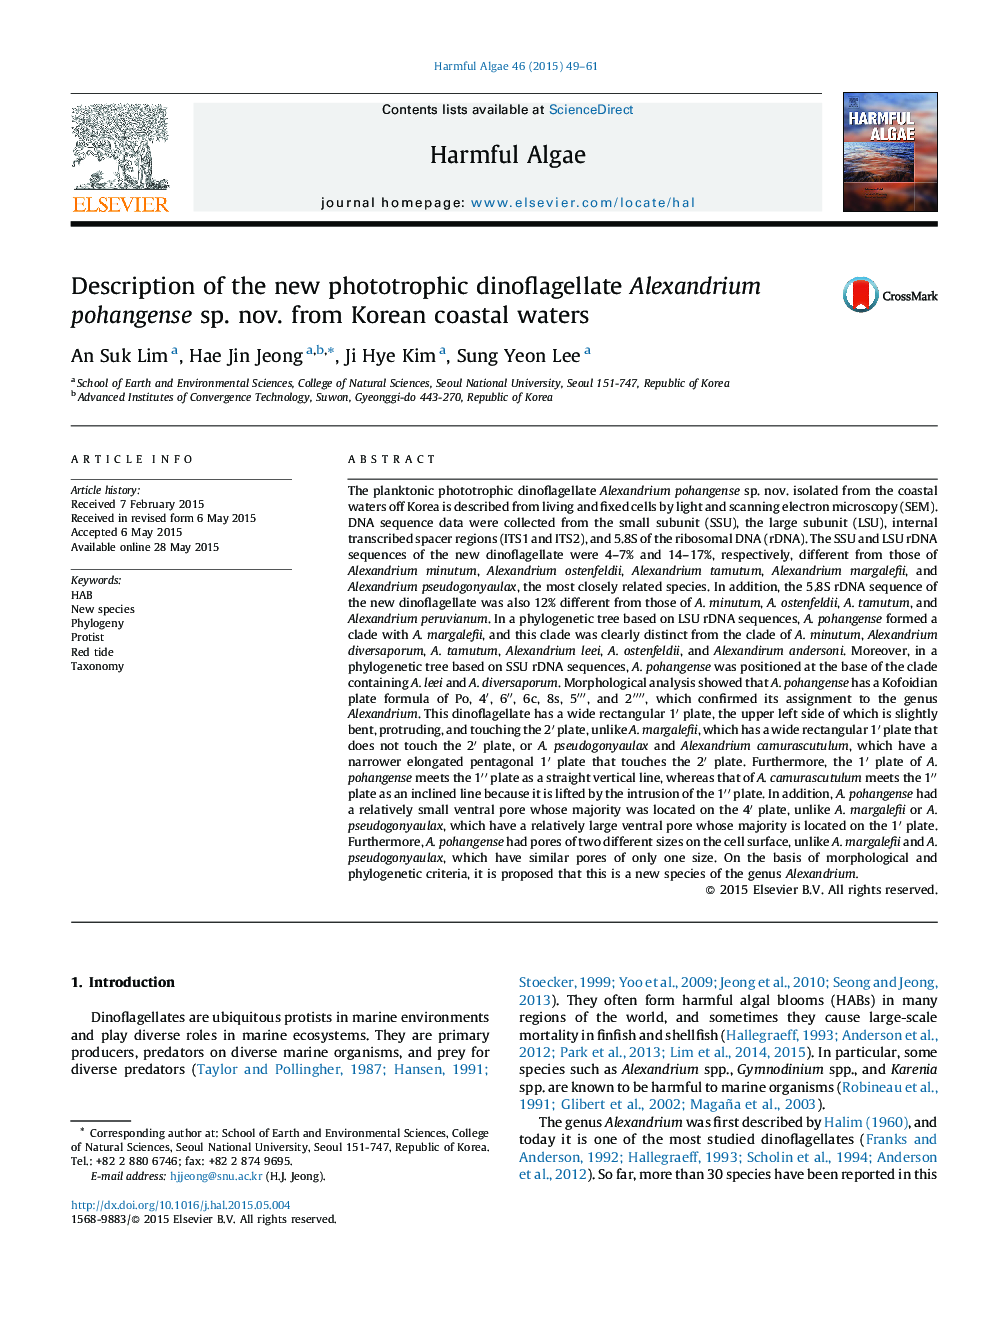 Description of the new phototrophic dinoflagellate Alexandrium pohangense sp. nov. from Korean coastal waters